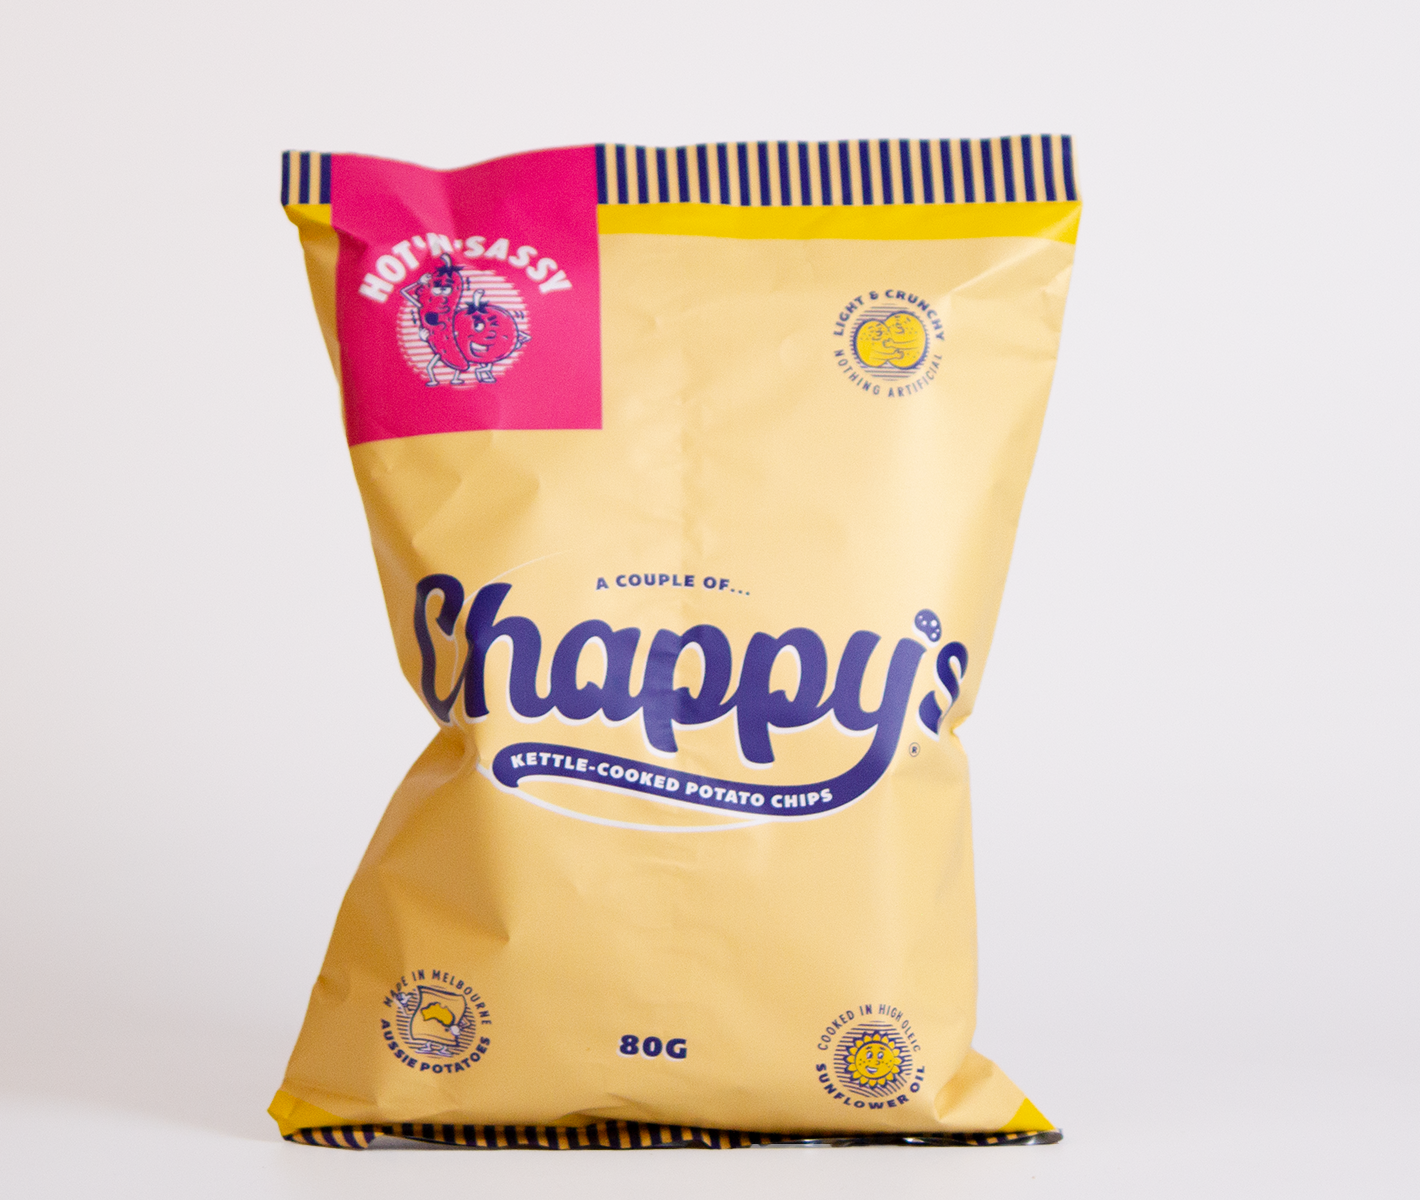 Chappy's Hot 'n' Sassy Chips (80g)